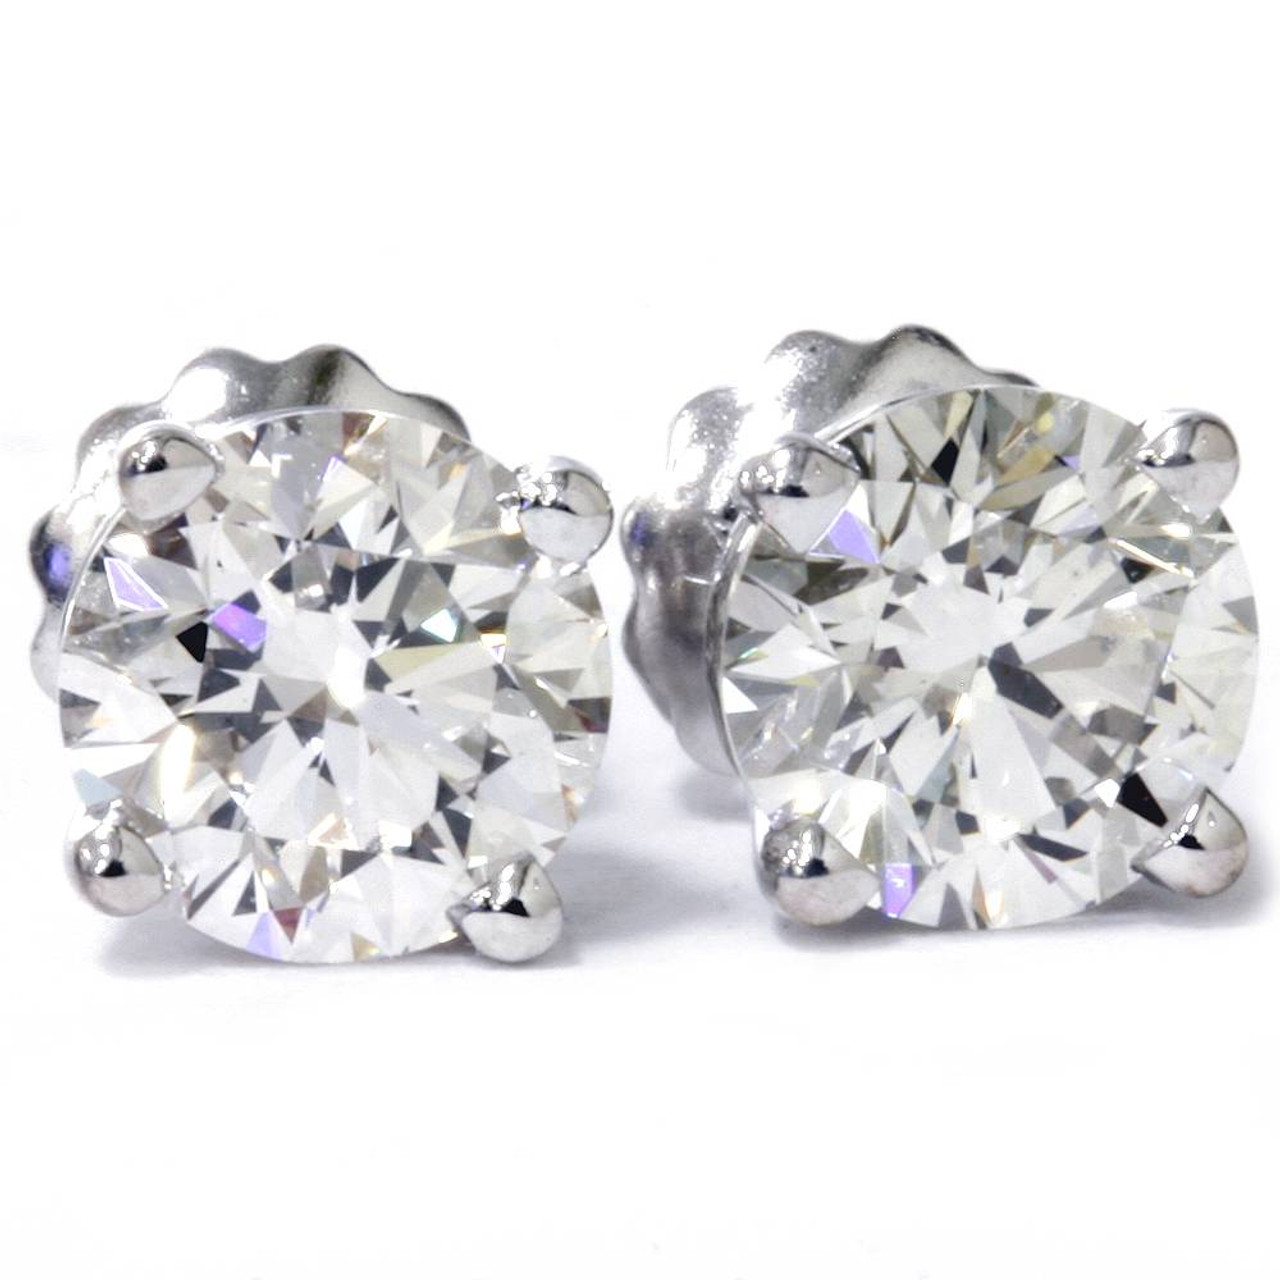 a pair of round lab-created diamond stud earrings